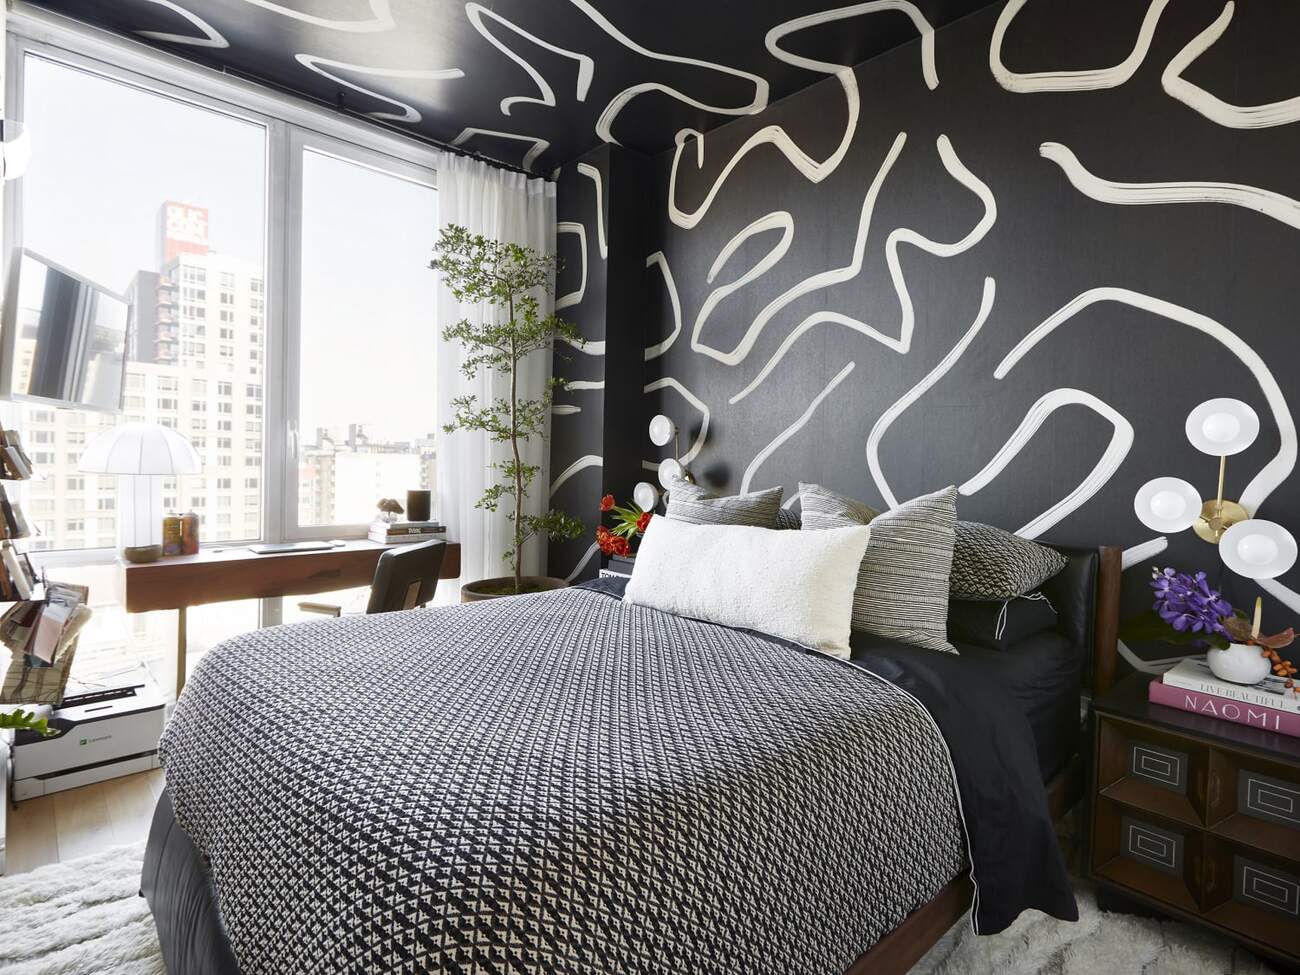 Black And White Bedroom Ideas: 10 Monochrome Decor Tips